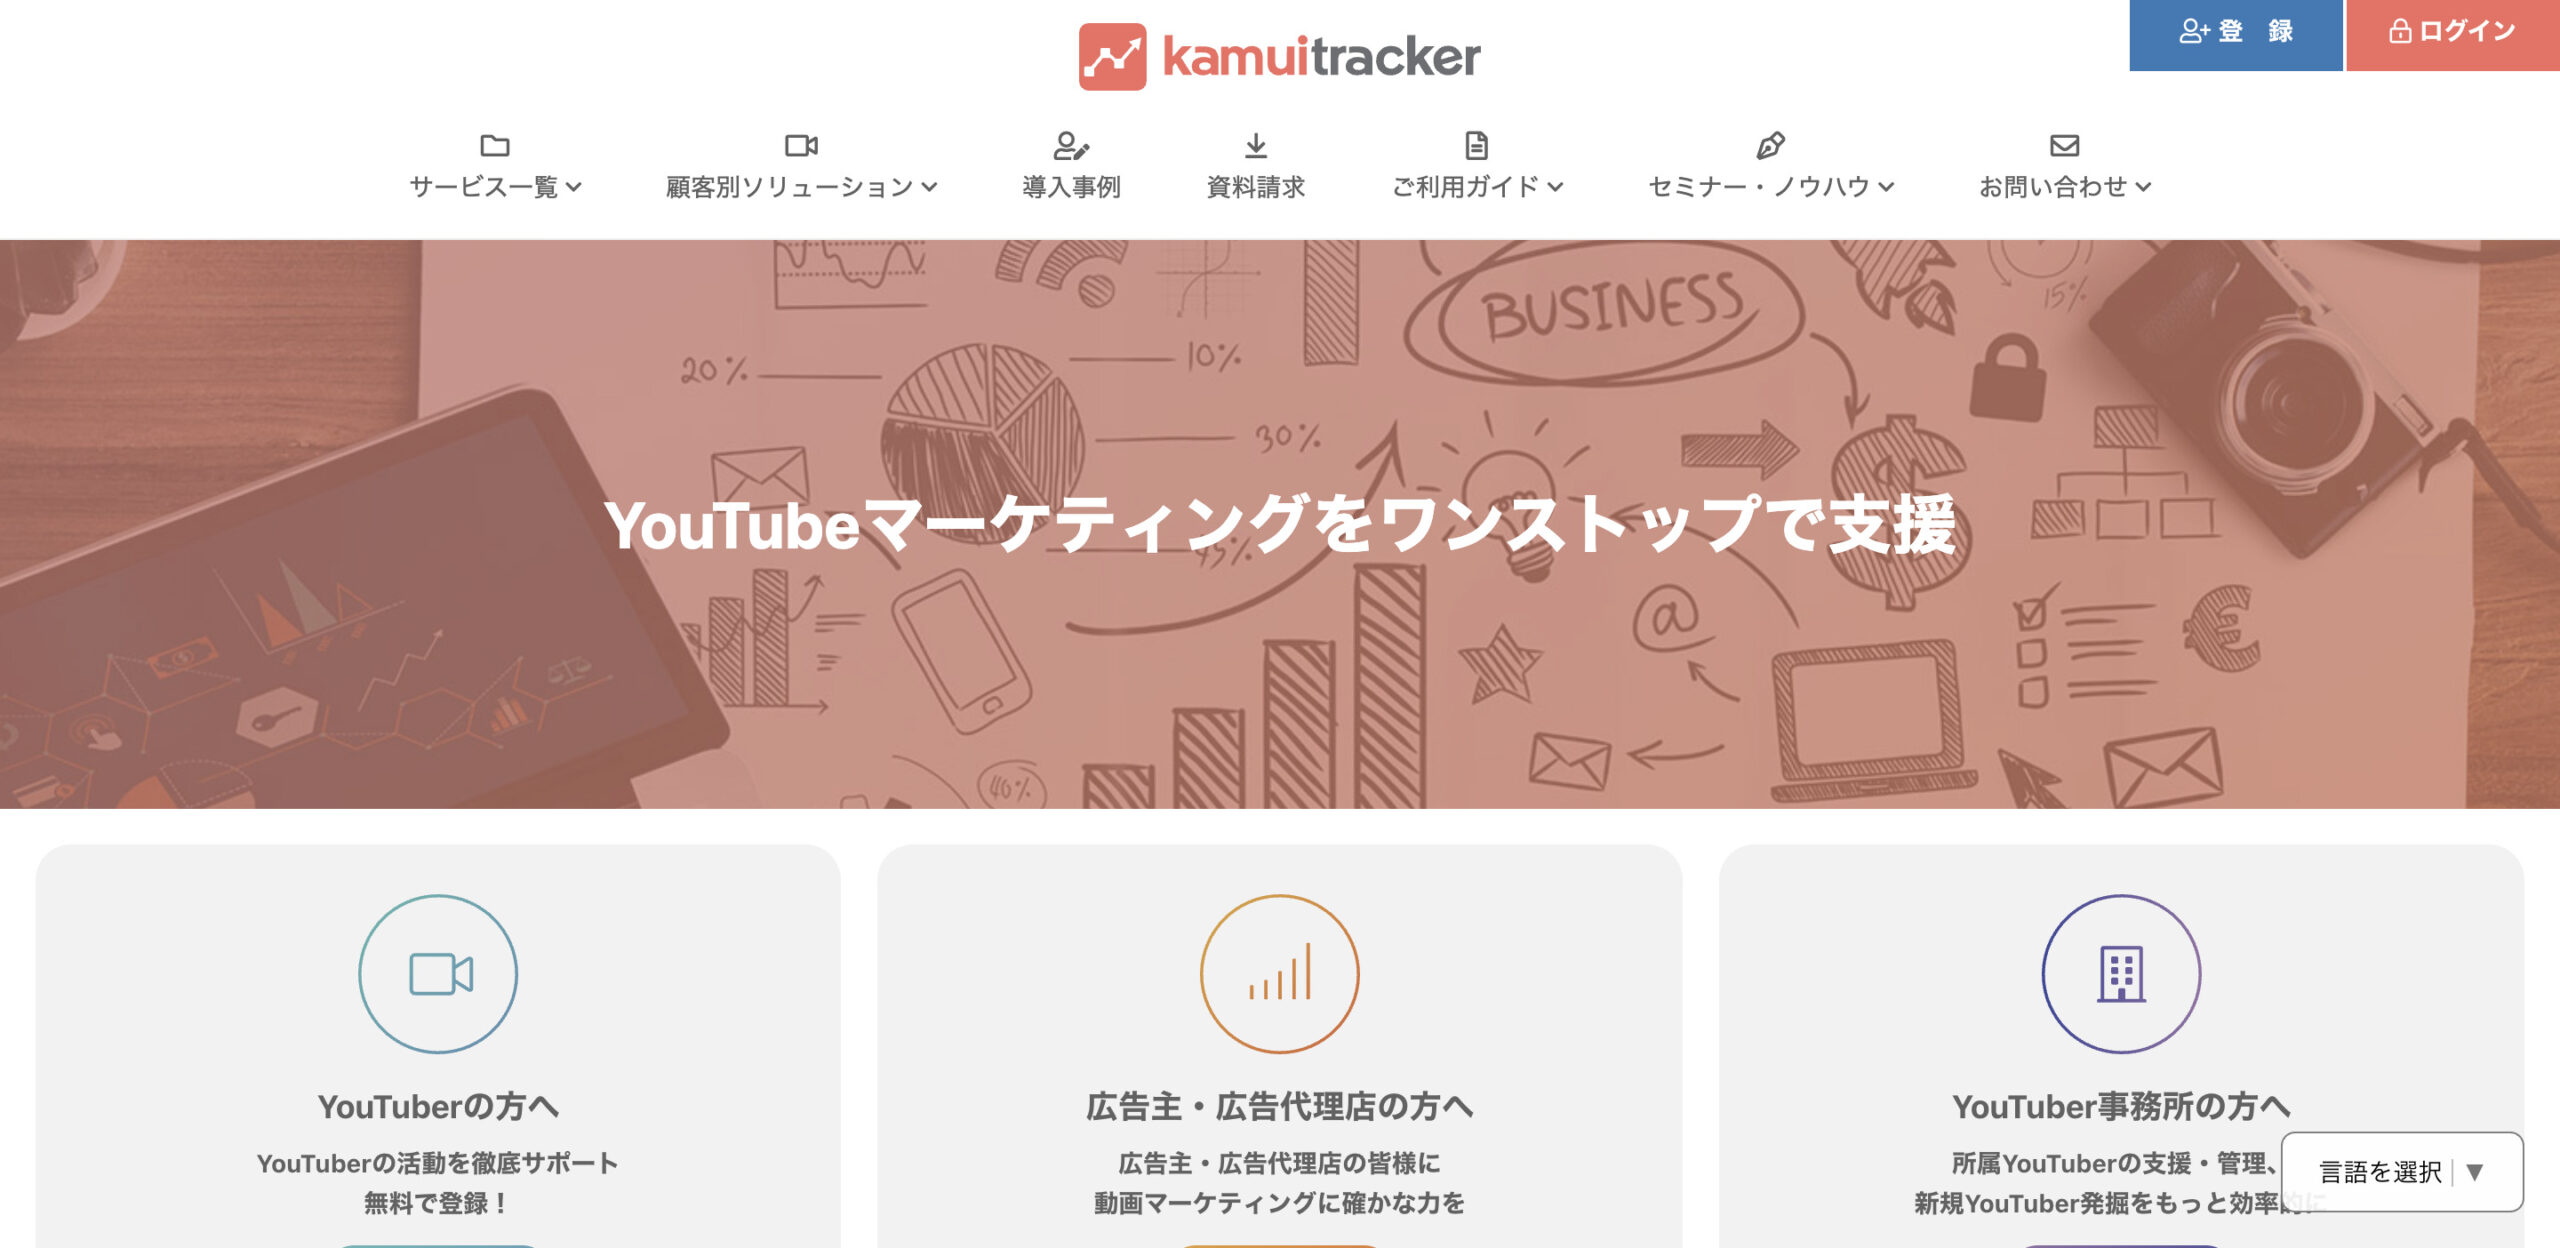 kamui tracker（カムイトラッカー）